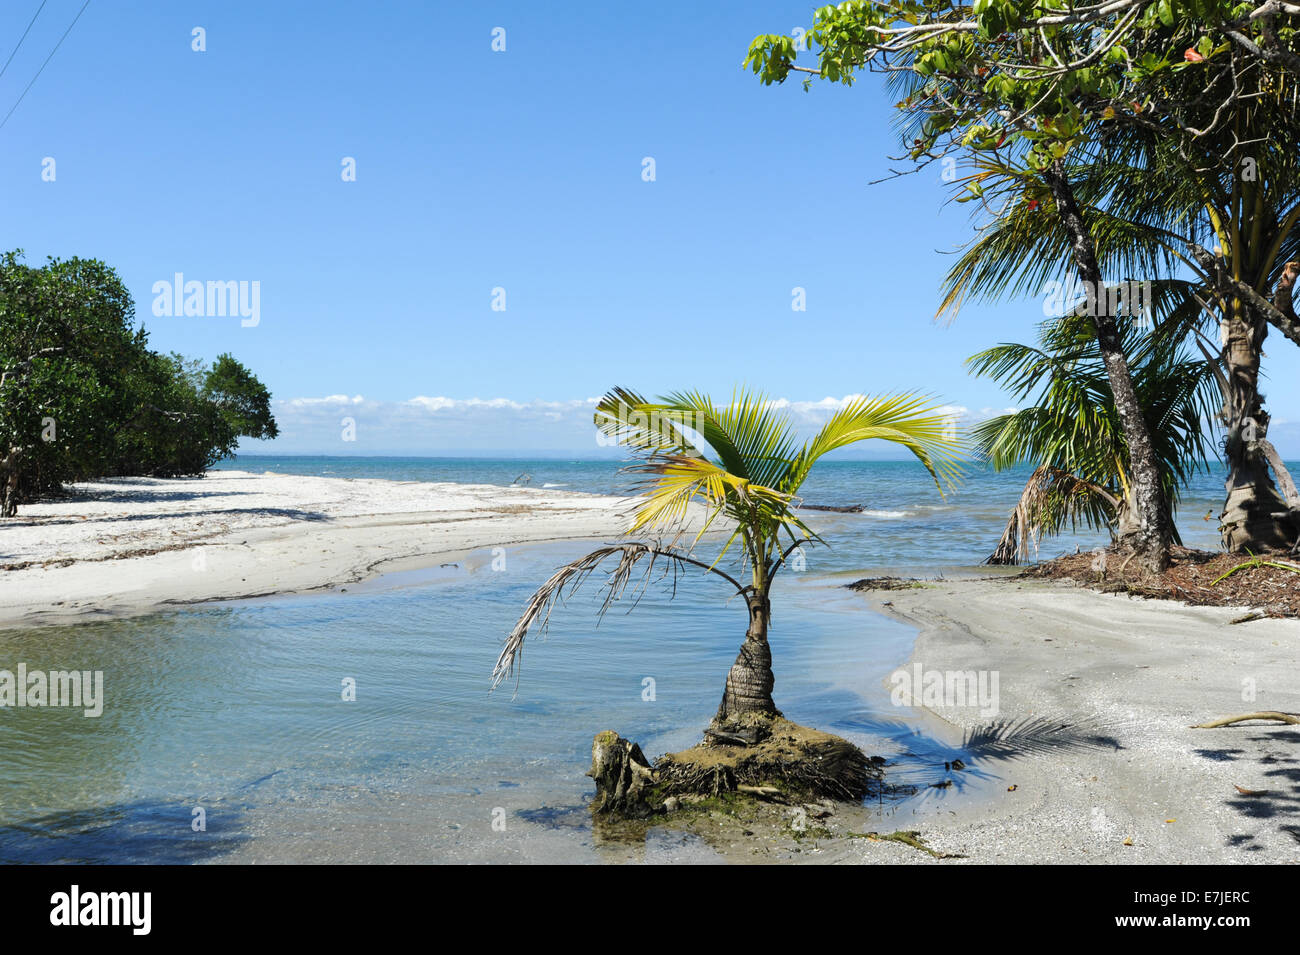 Guatemala, Central America, beach, Livingston, nature, ocean, palm trees, playa blanca, sand, scenic, trees Stock Photo